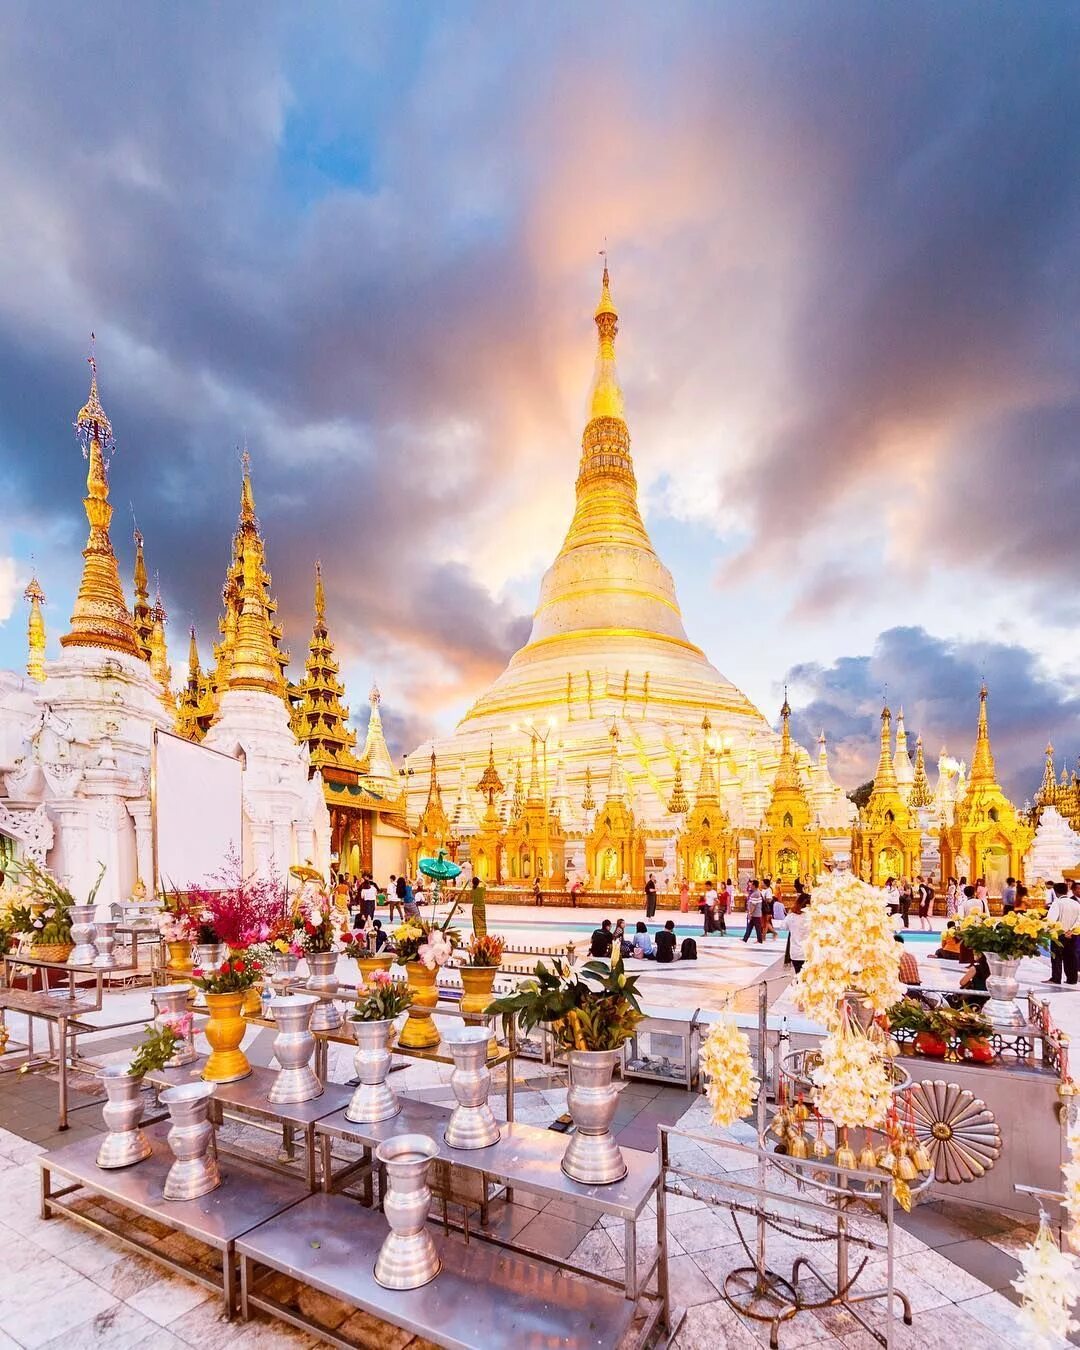 Greatest temples. Шведагон Мьянма. Пагода Шведагон Мьянма. Золотая ступа Шведагон. Шведагон внутри.